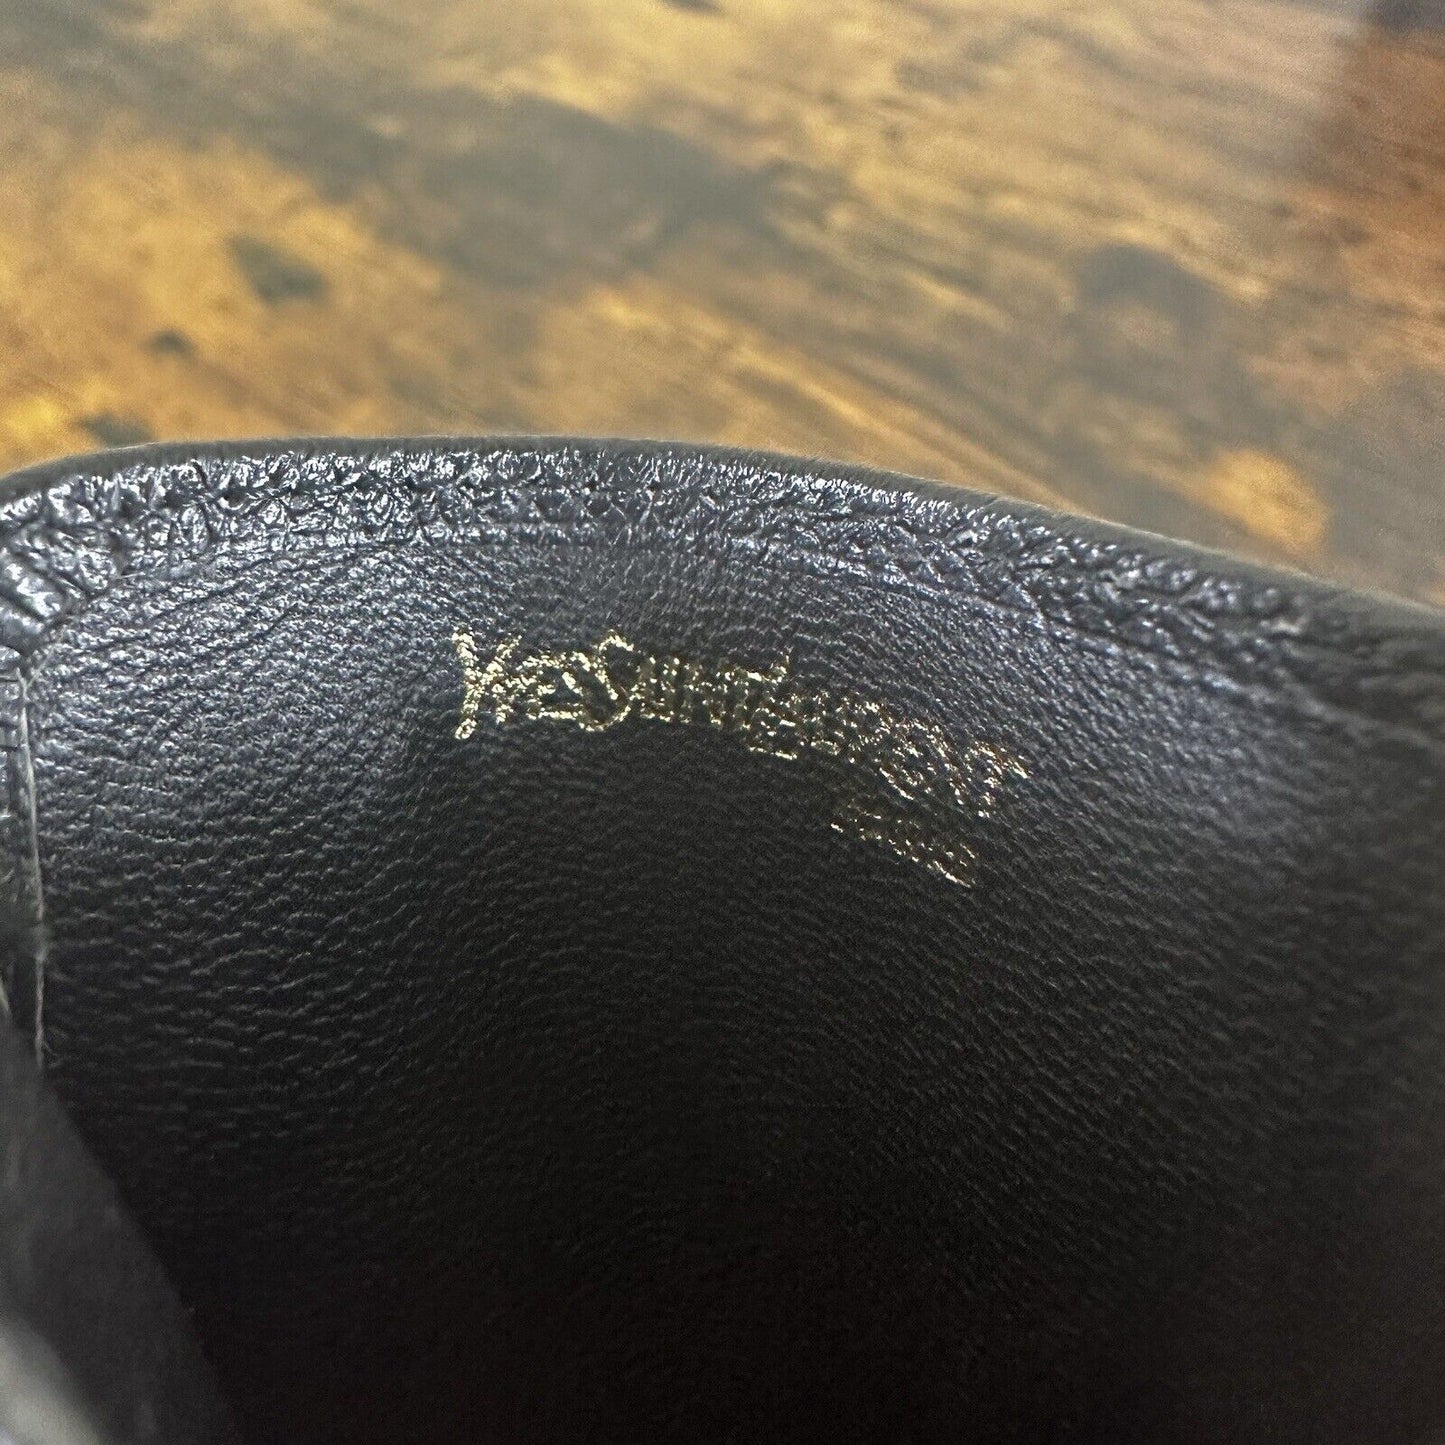 Yves Saint Laurent YSL Card Case Leather Black Logo Authenticated W/ COA Vintage